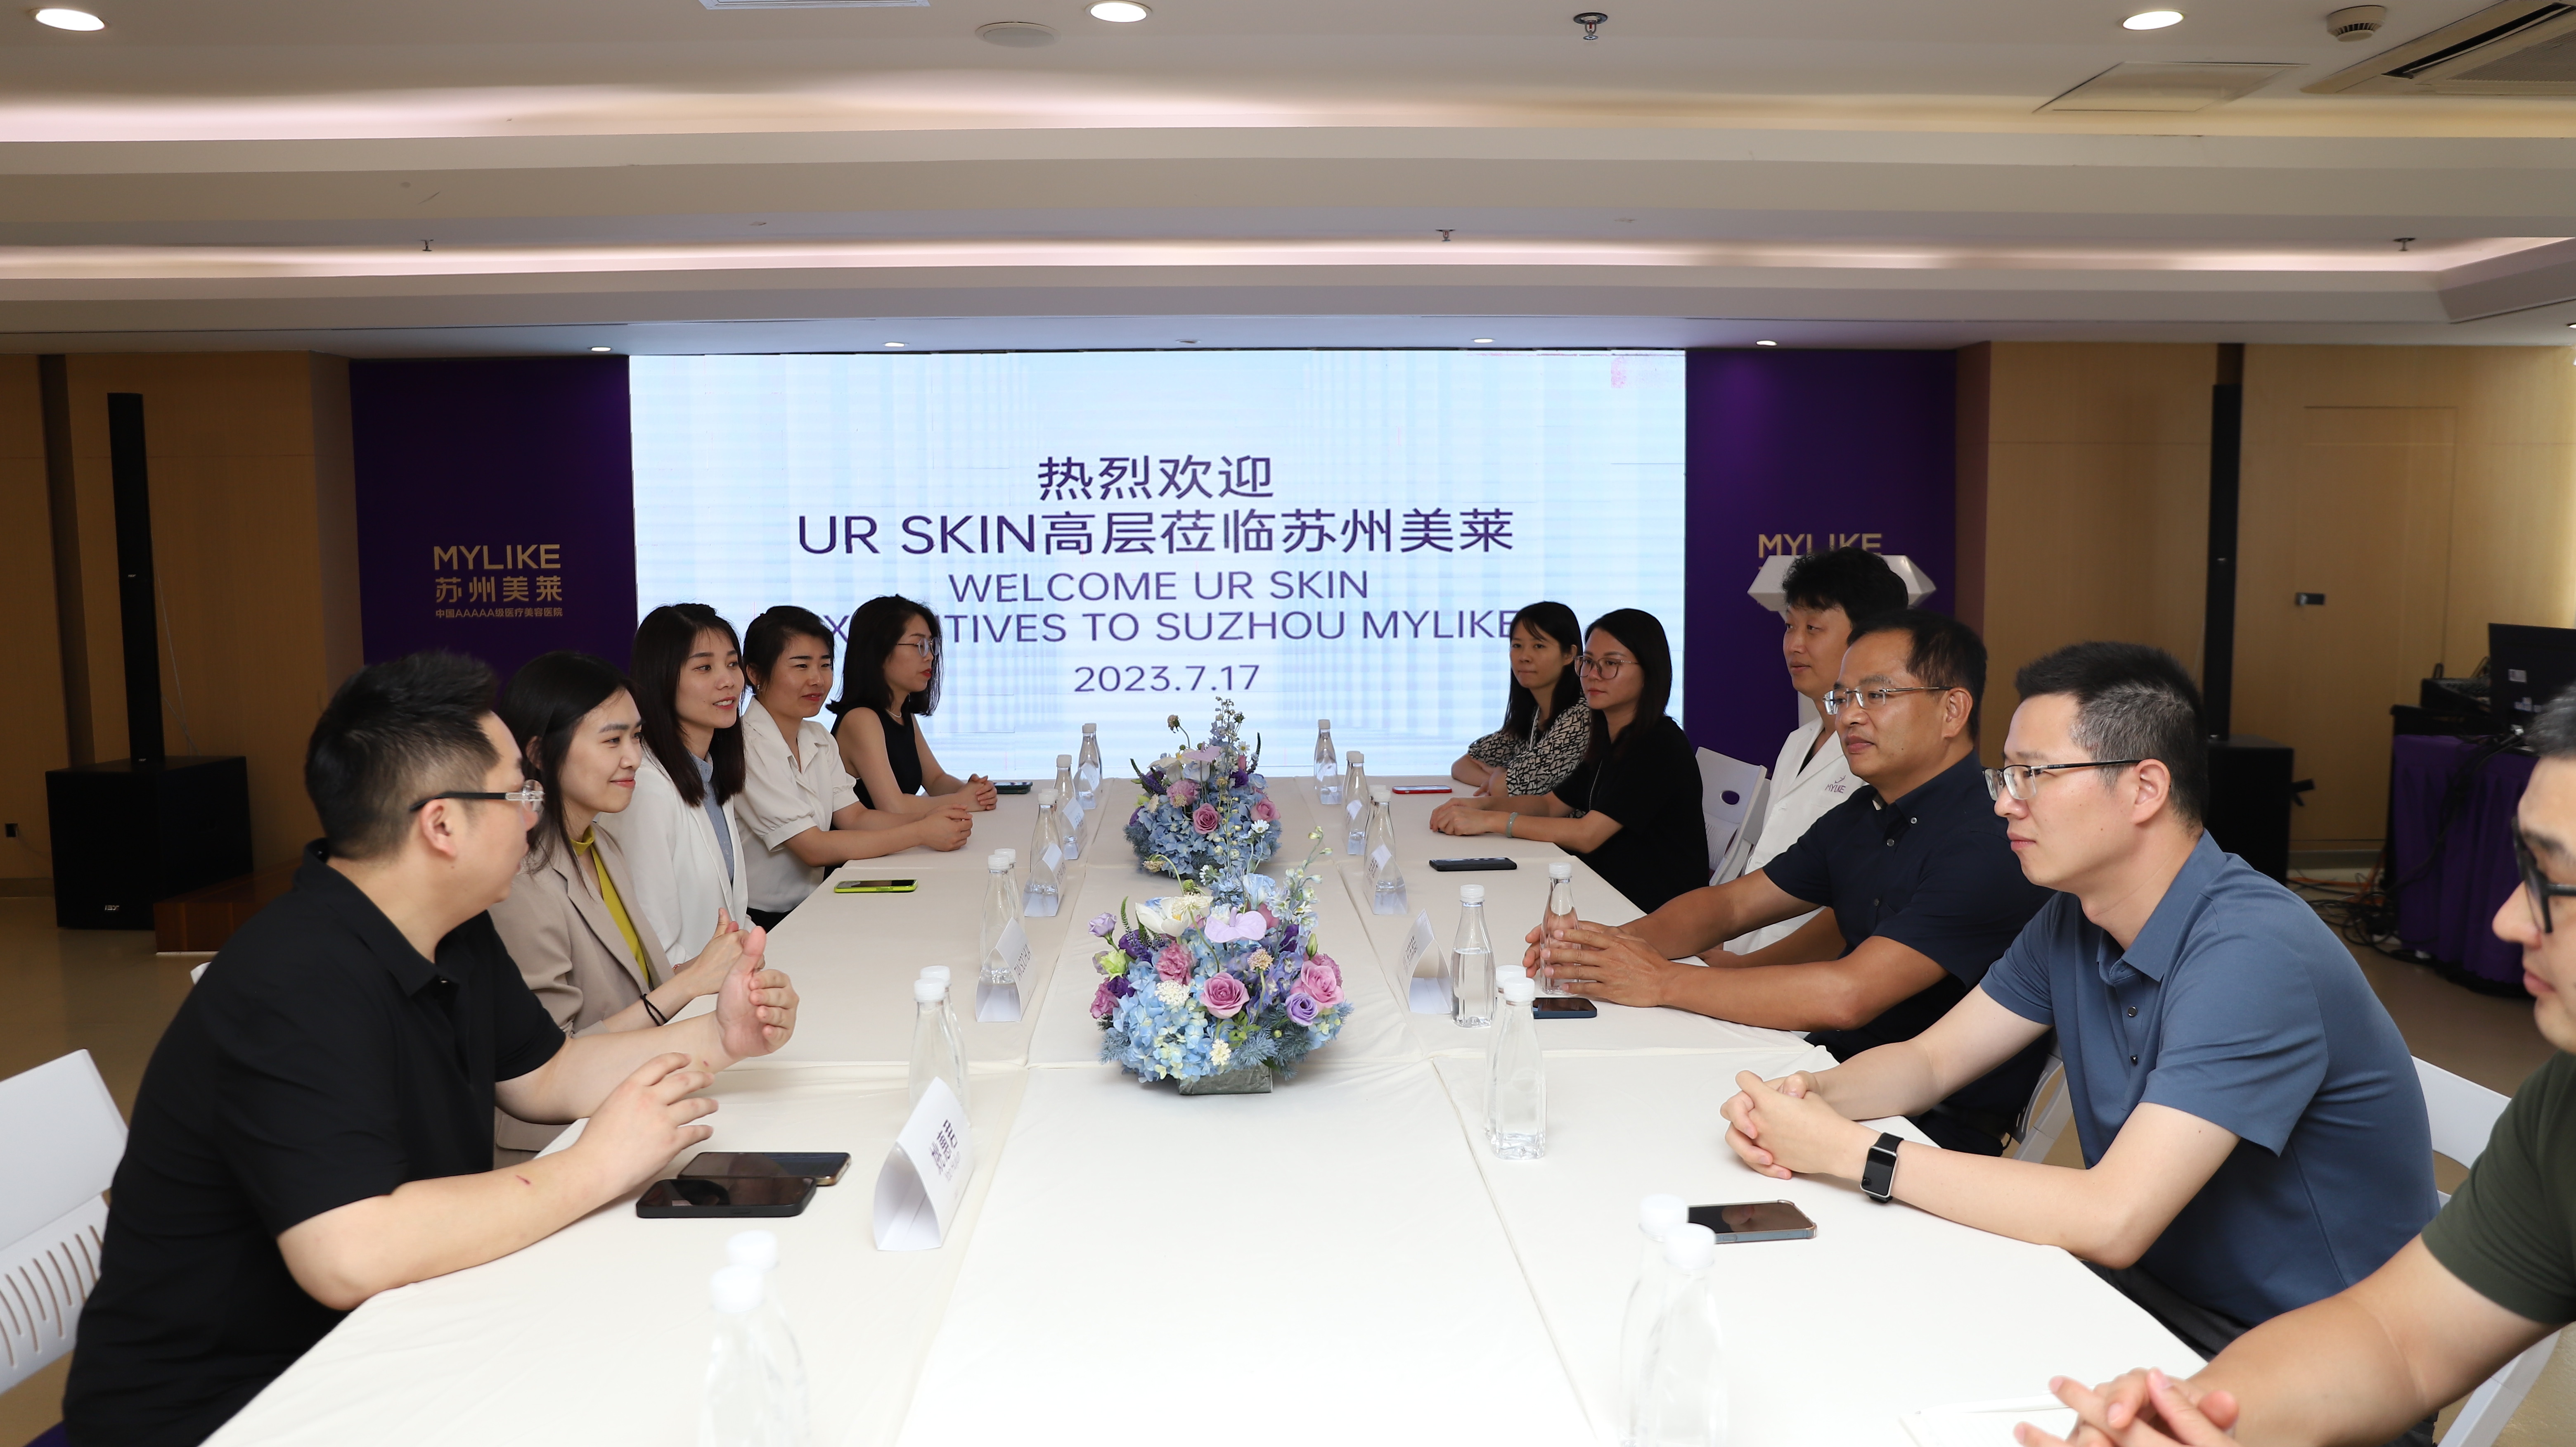 Utveksling mellom UR SKIN Group (Malaysia) og Meilai Group (Suzhou)